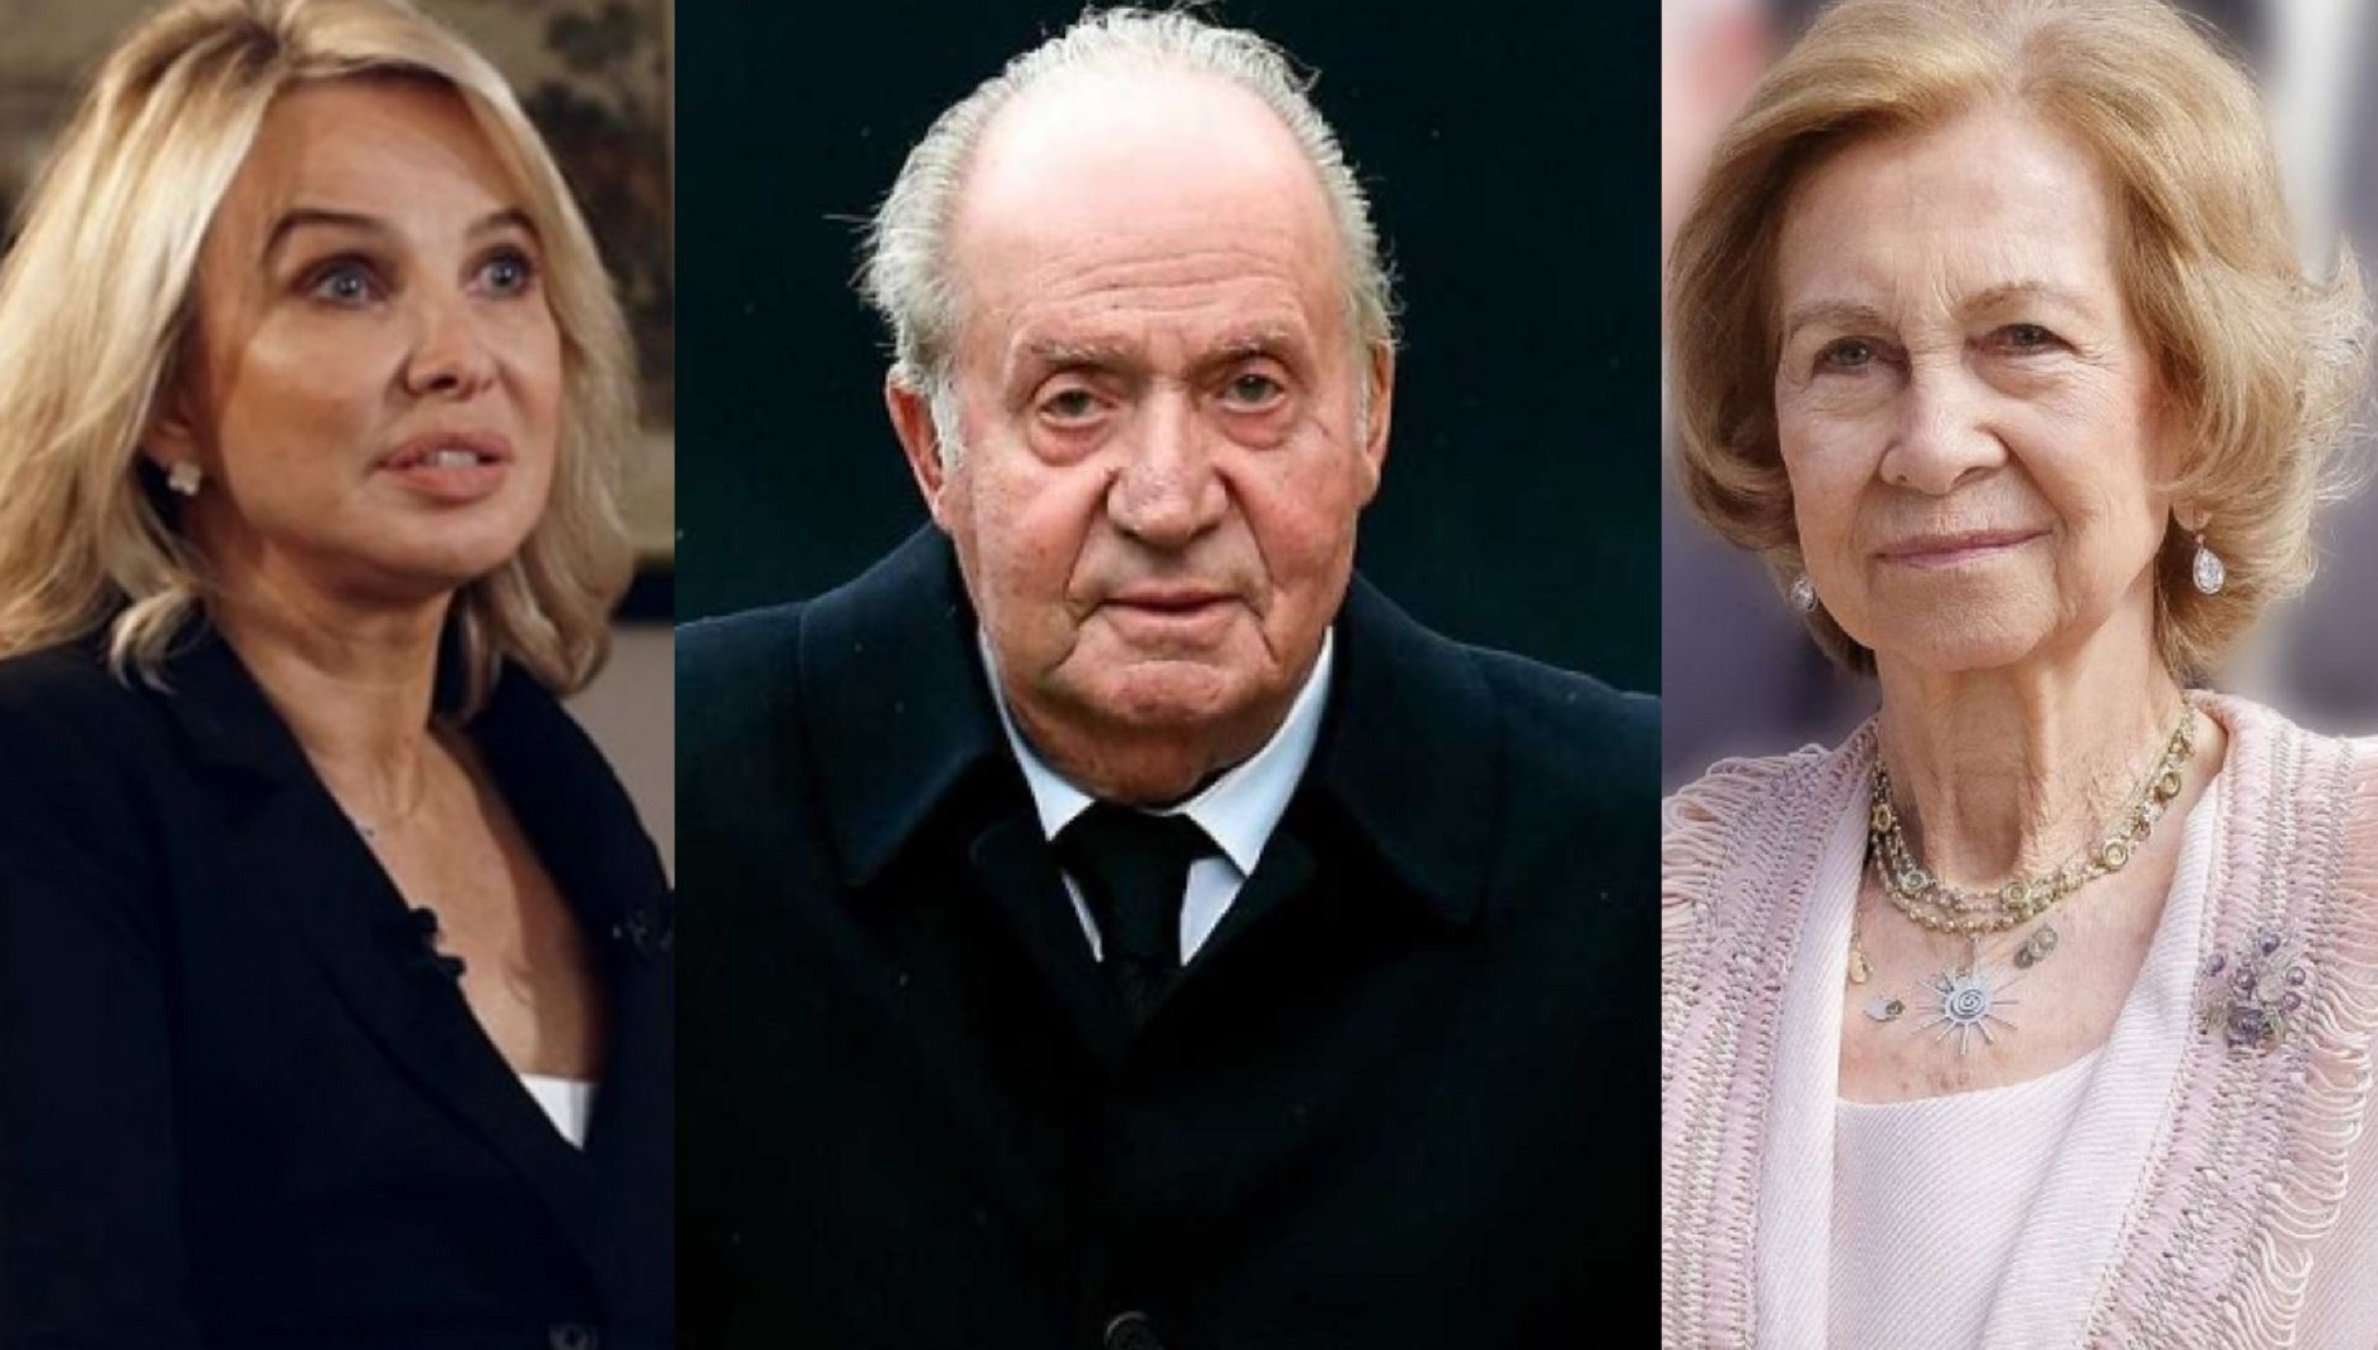 Confirmat: la reina Sofia i Corinna Larsen són família